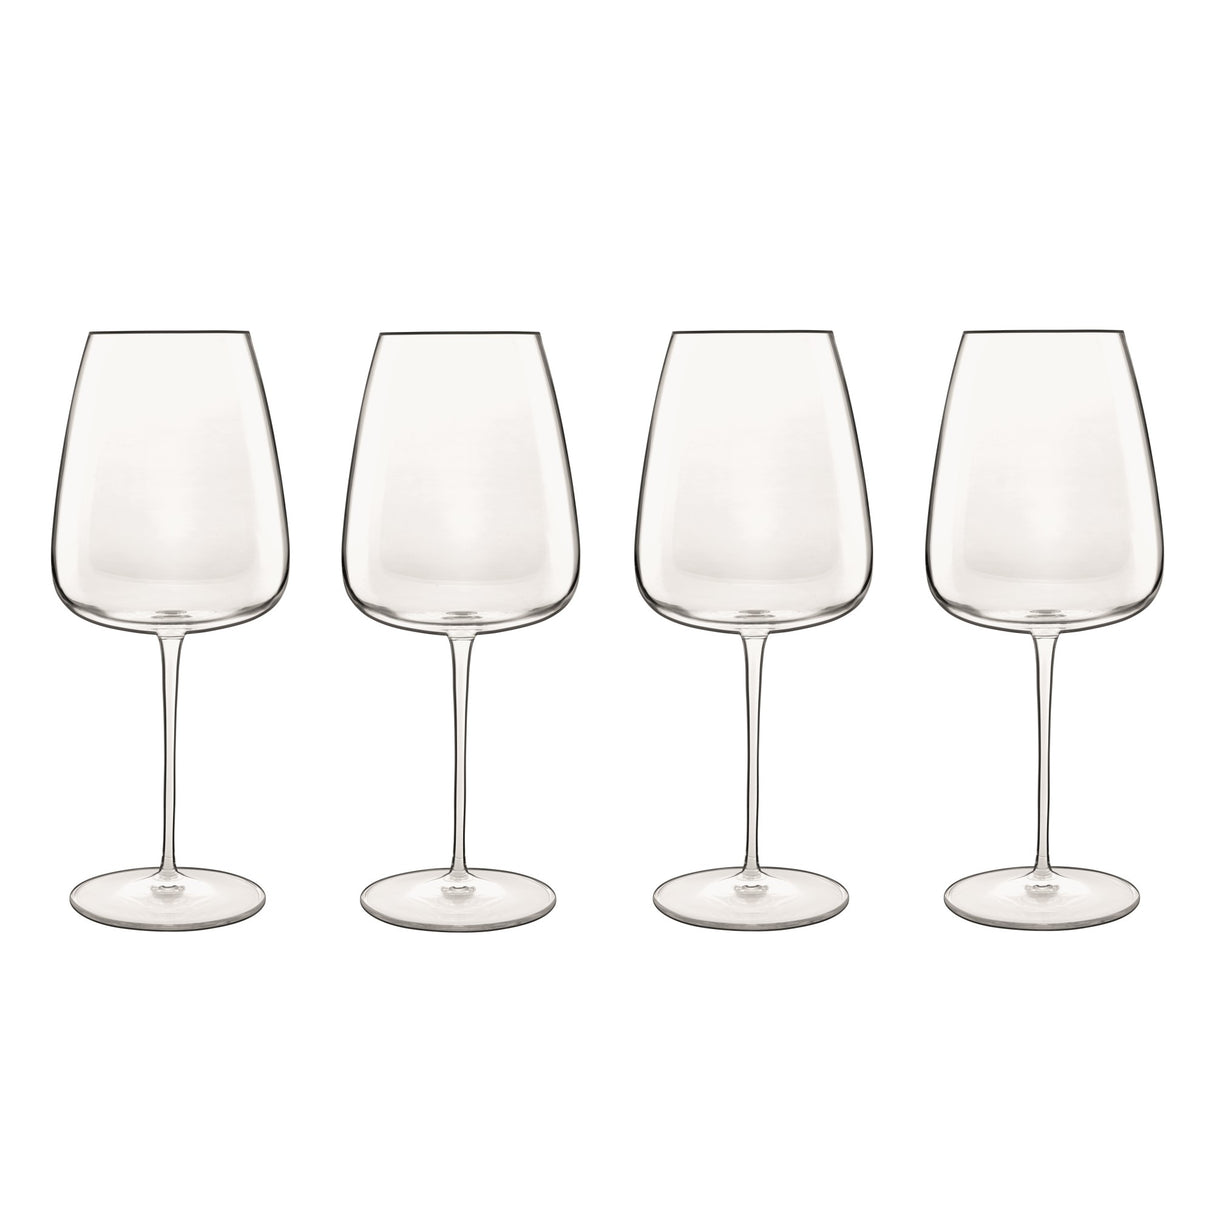 Set of 4 elegant wine glasses